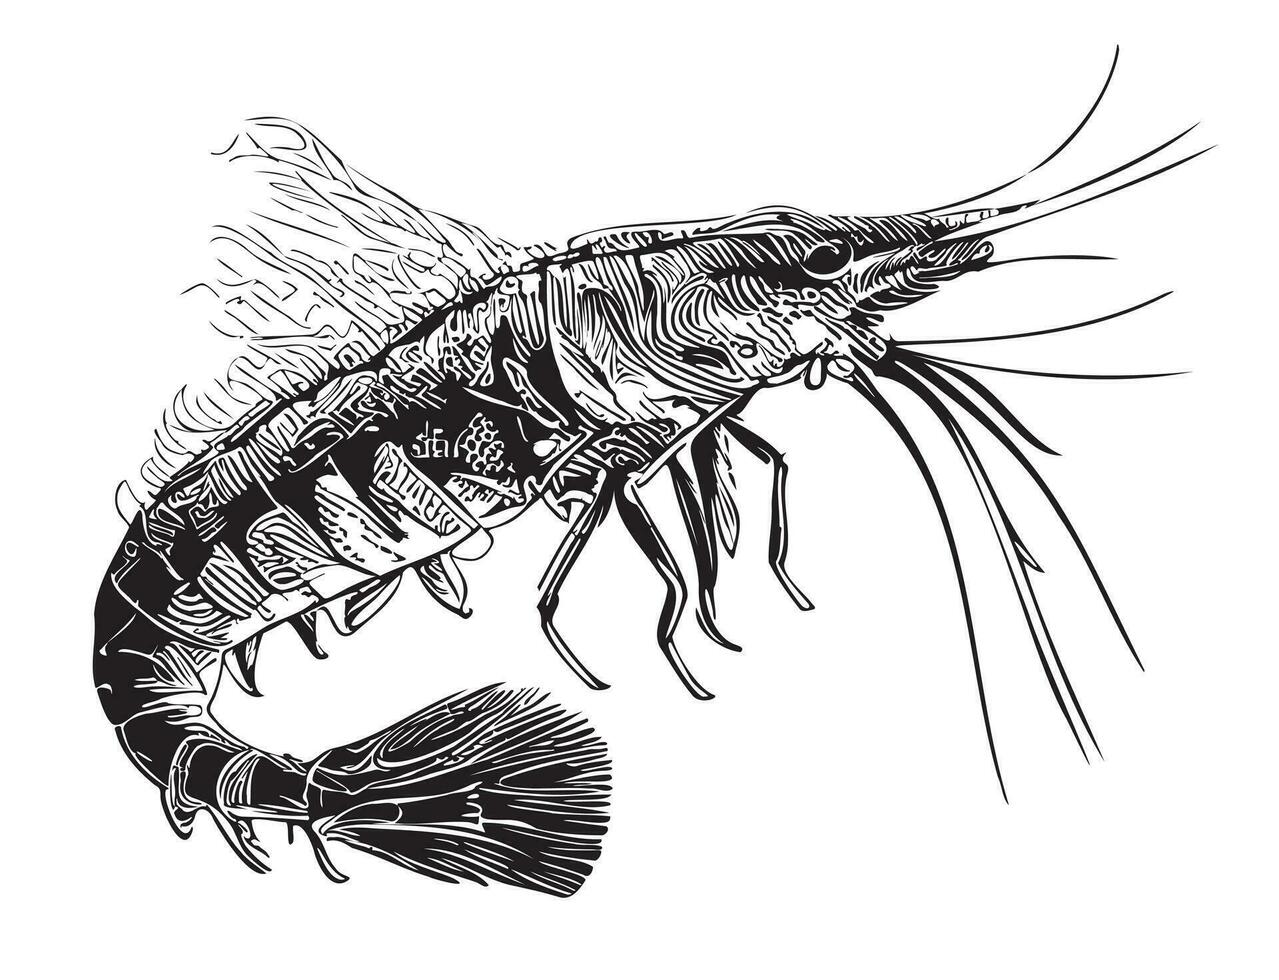 Shrimp sea sketch hand drawn in doodle style Vector illustration